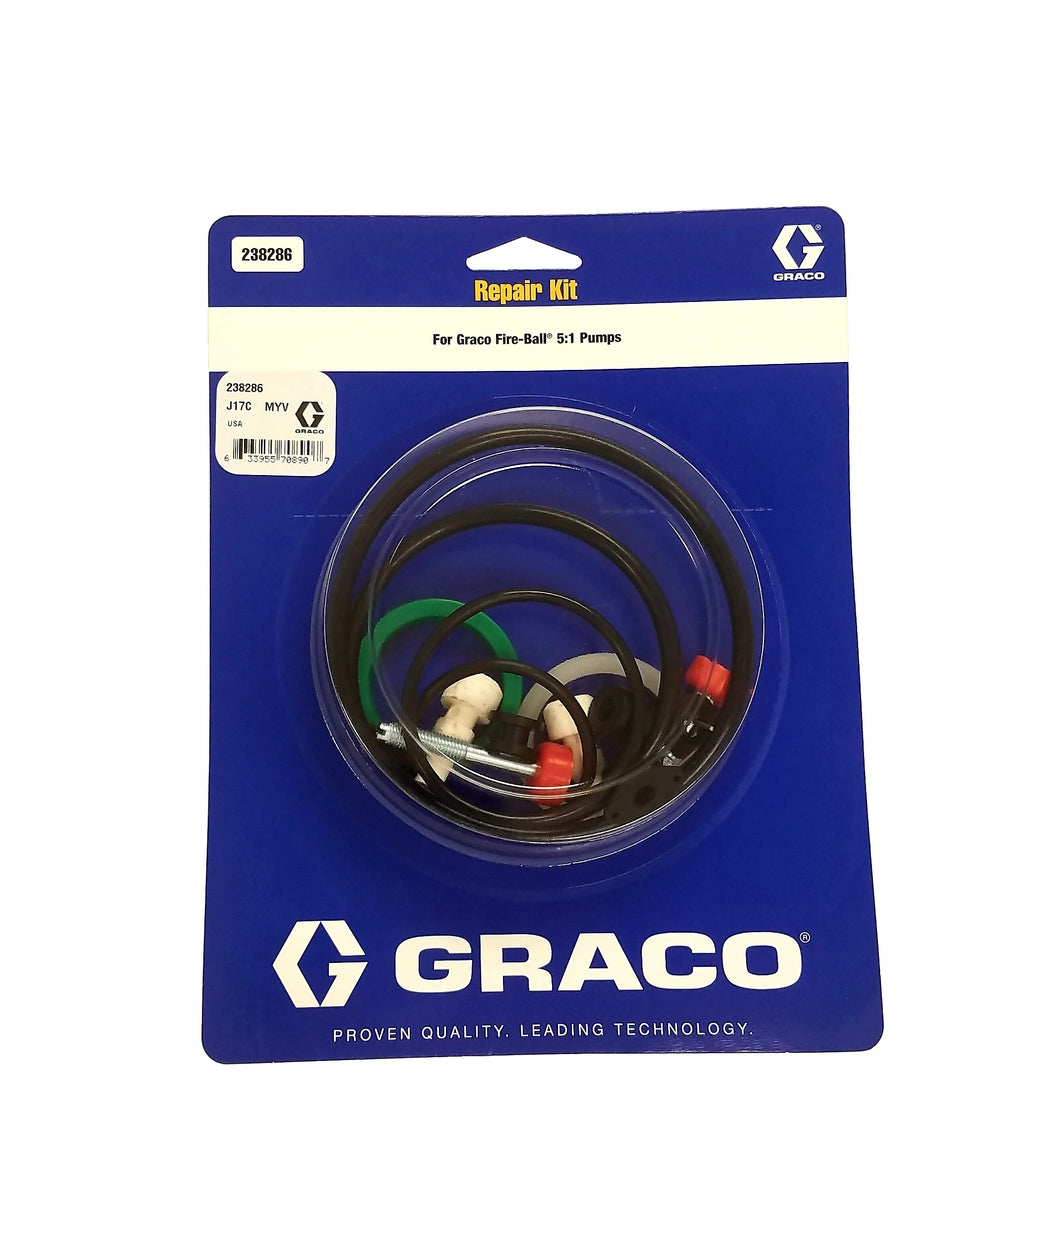 Graco 238286 Repair Kit 5:1 Ratio Fire Ball 300 Pneumatic Oil Pumps